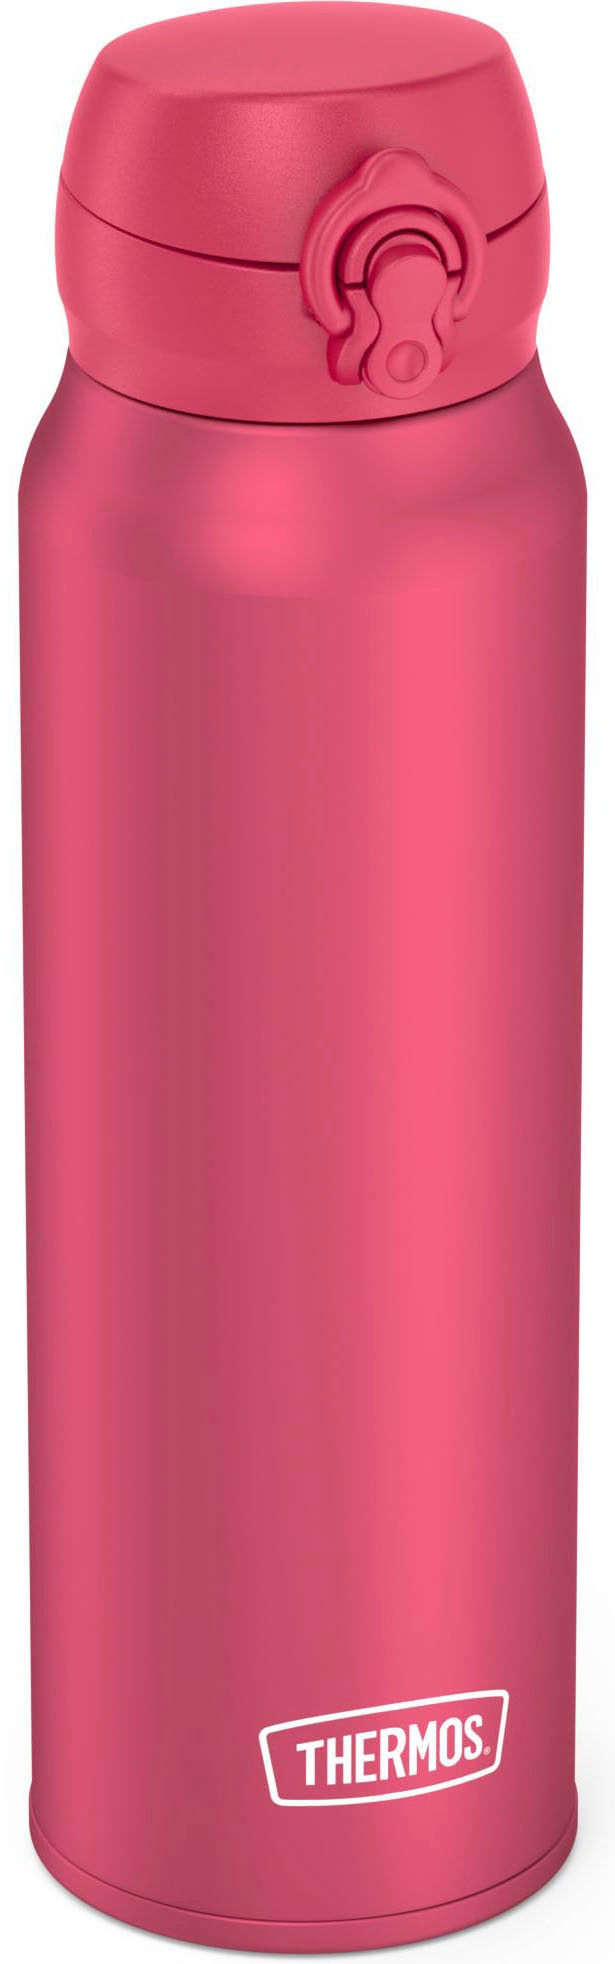 THERMOS Isolierflasche »ULTRALIGHT BOTTLE«, doppelwandiger Edelstahl